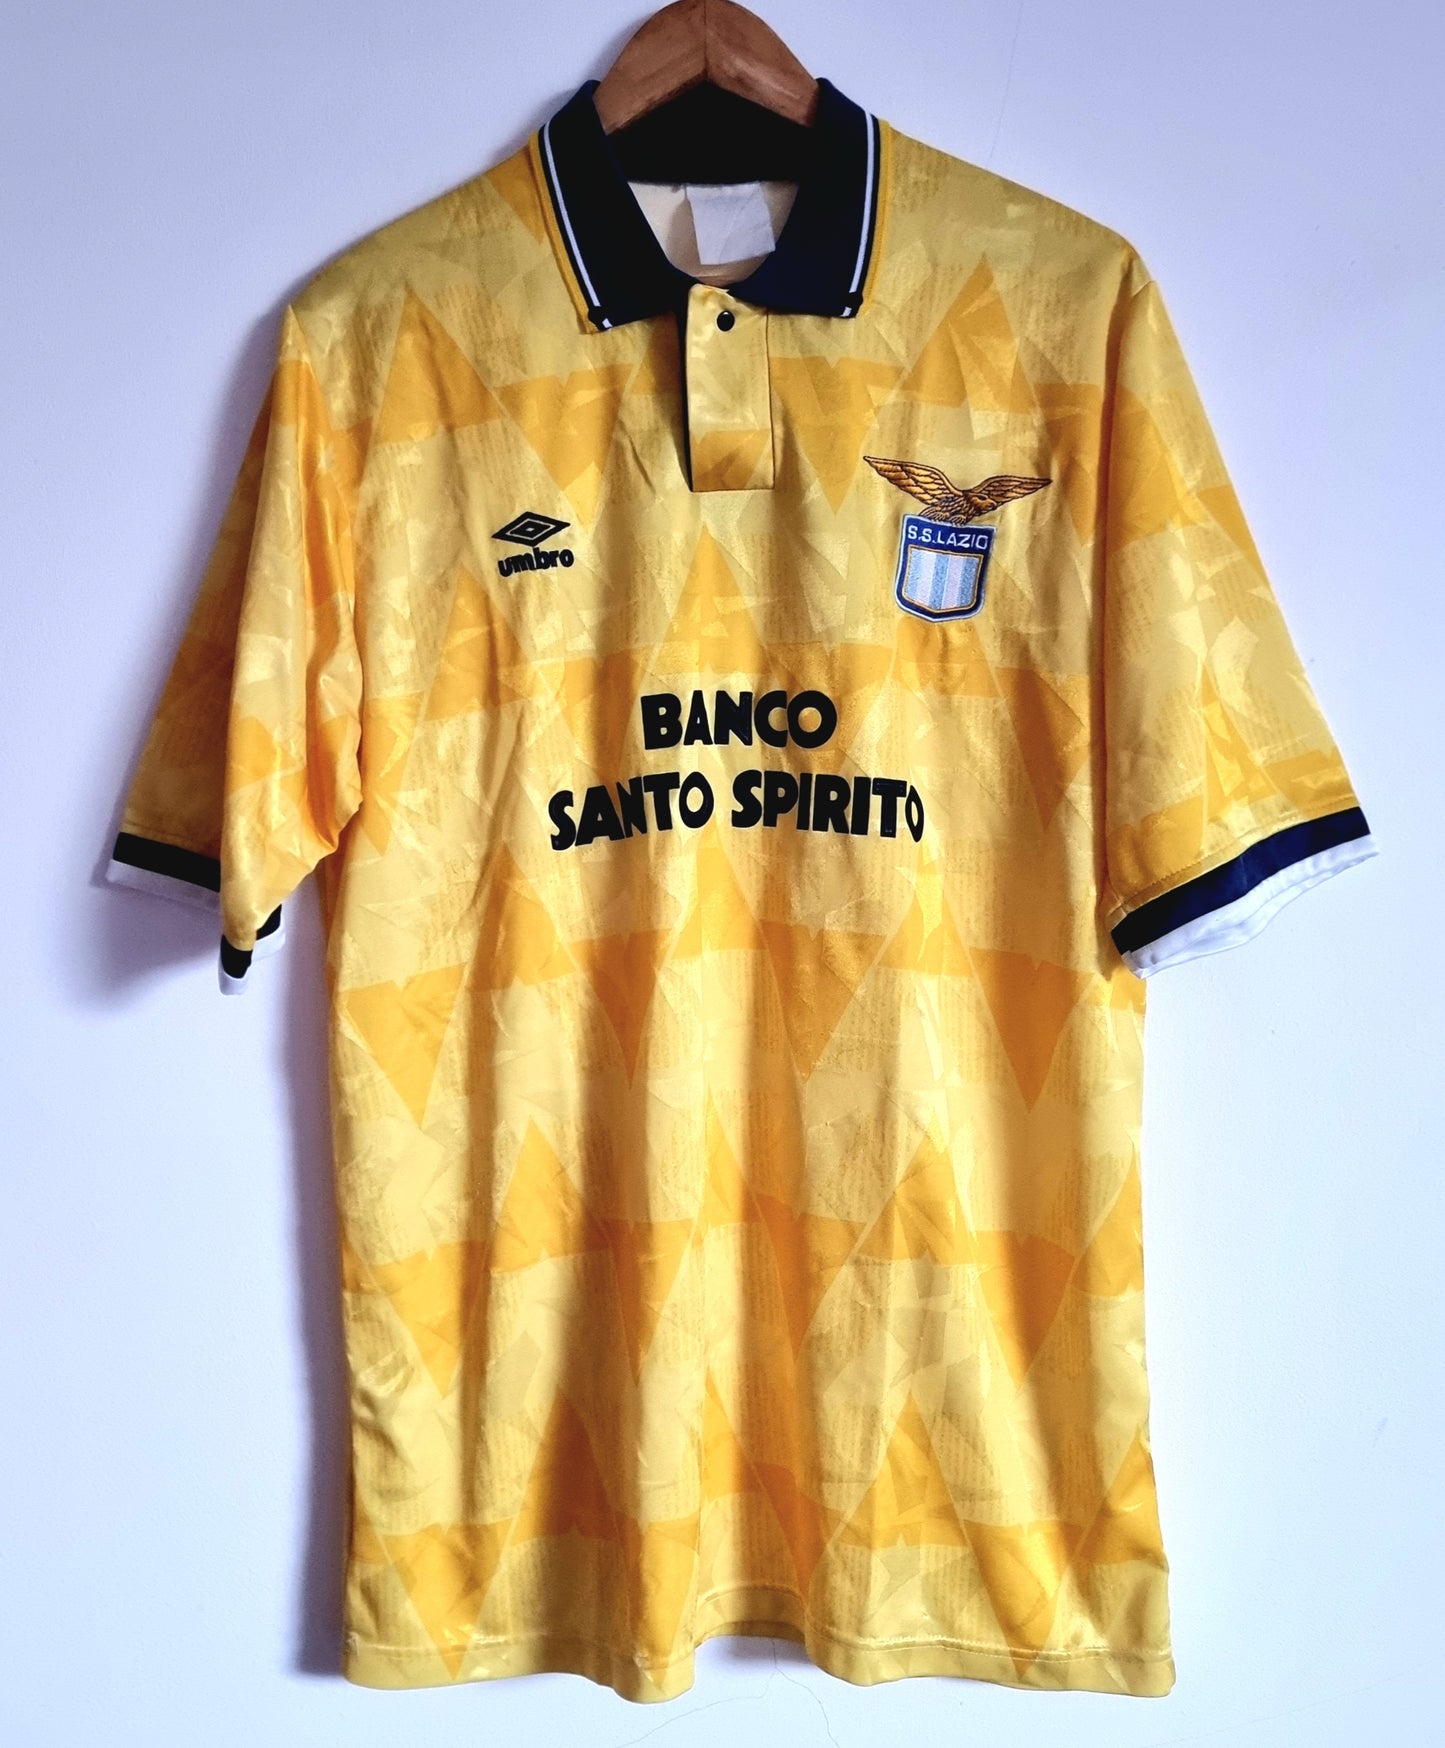 Umbro Lazio 91/92 '5 (Gregucci)' Match Issue Away Shirt XL